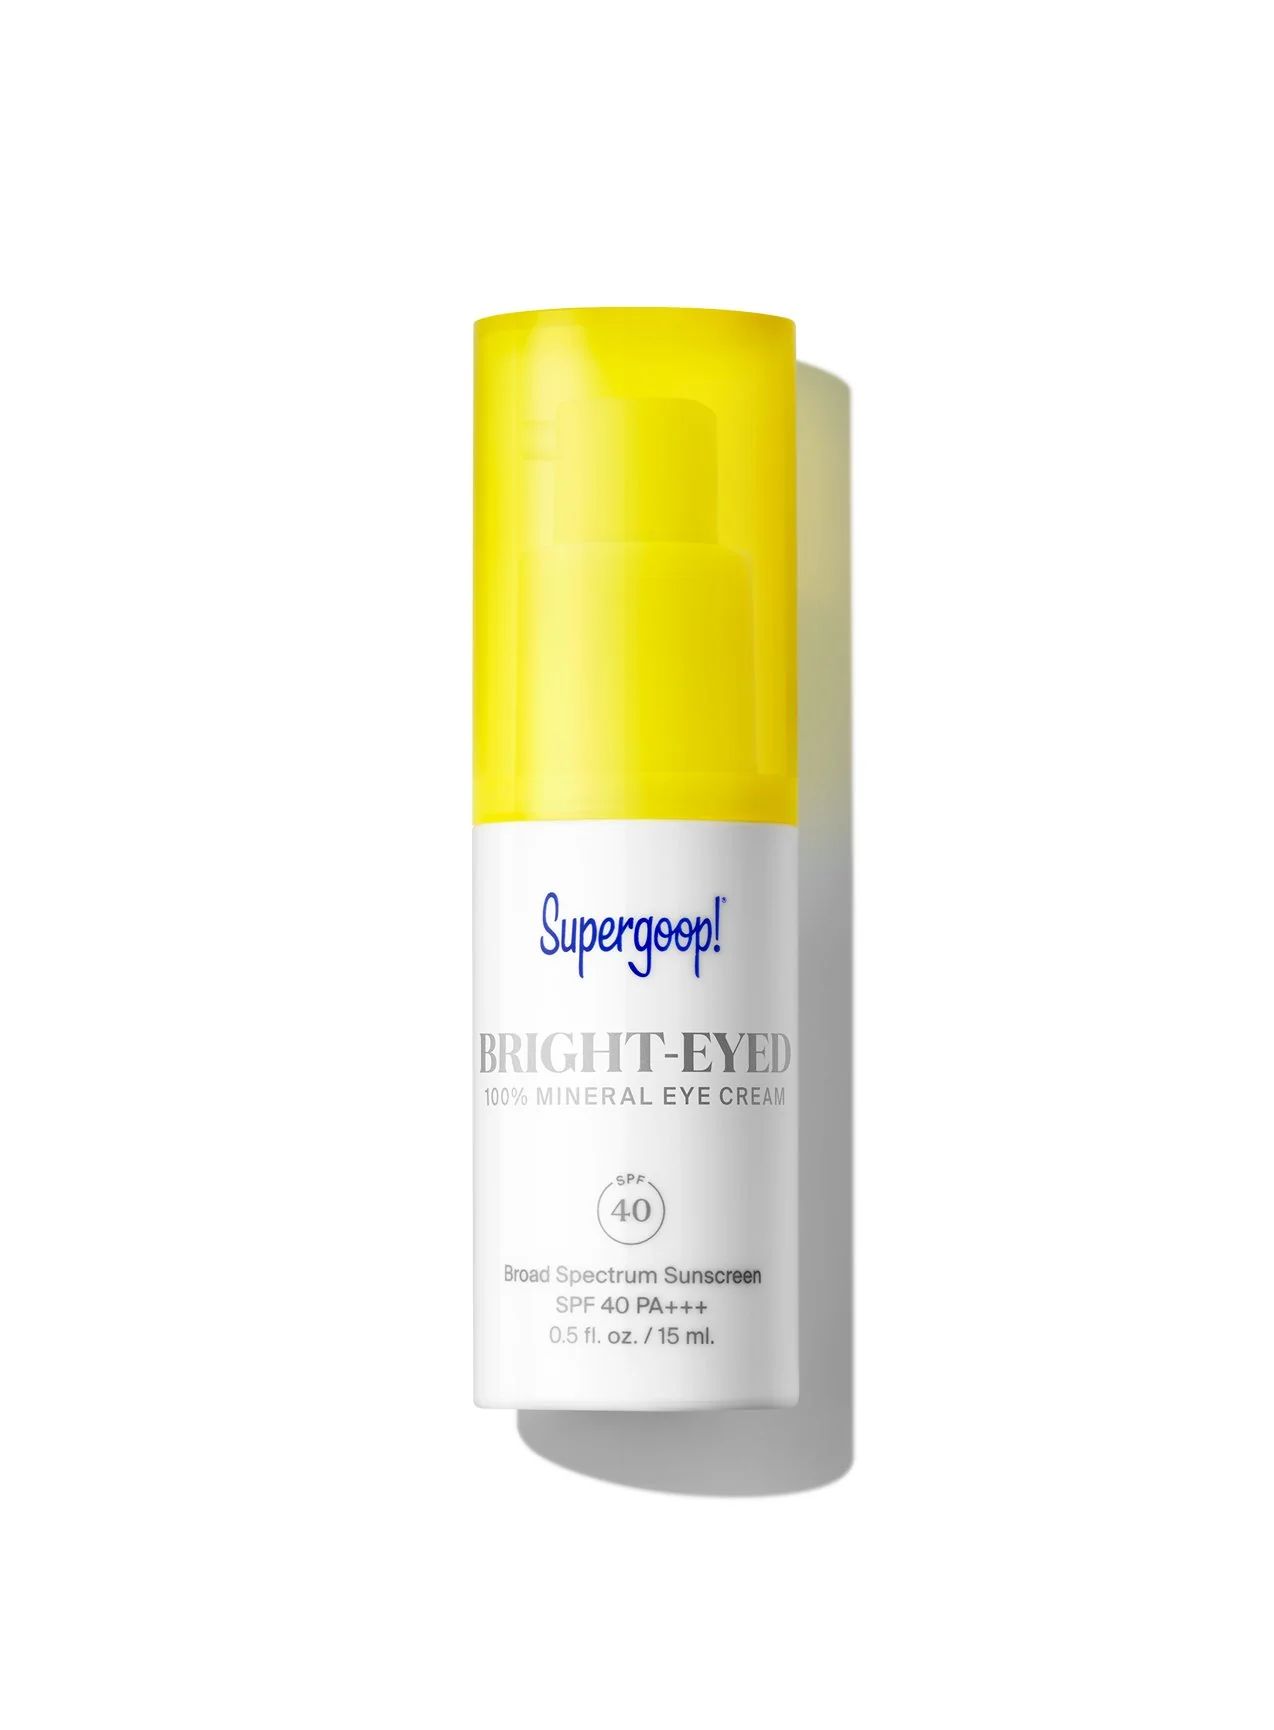 Bright-Eyed 100% Mineral Eye Cream SPF 40 | Supergoop